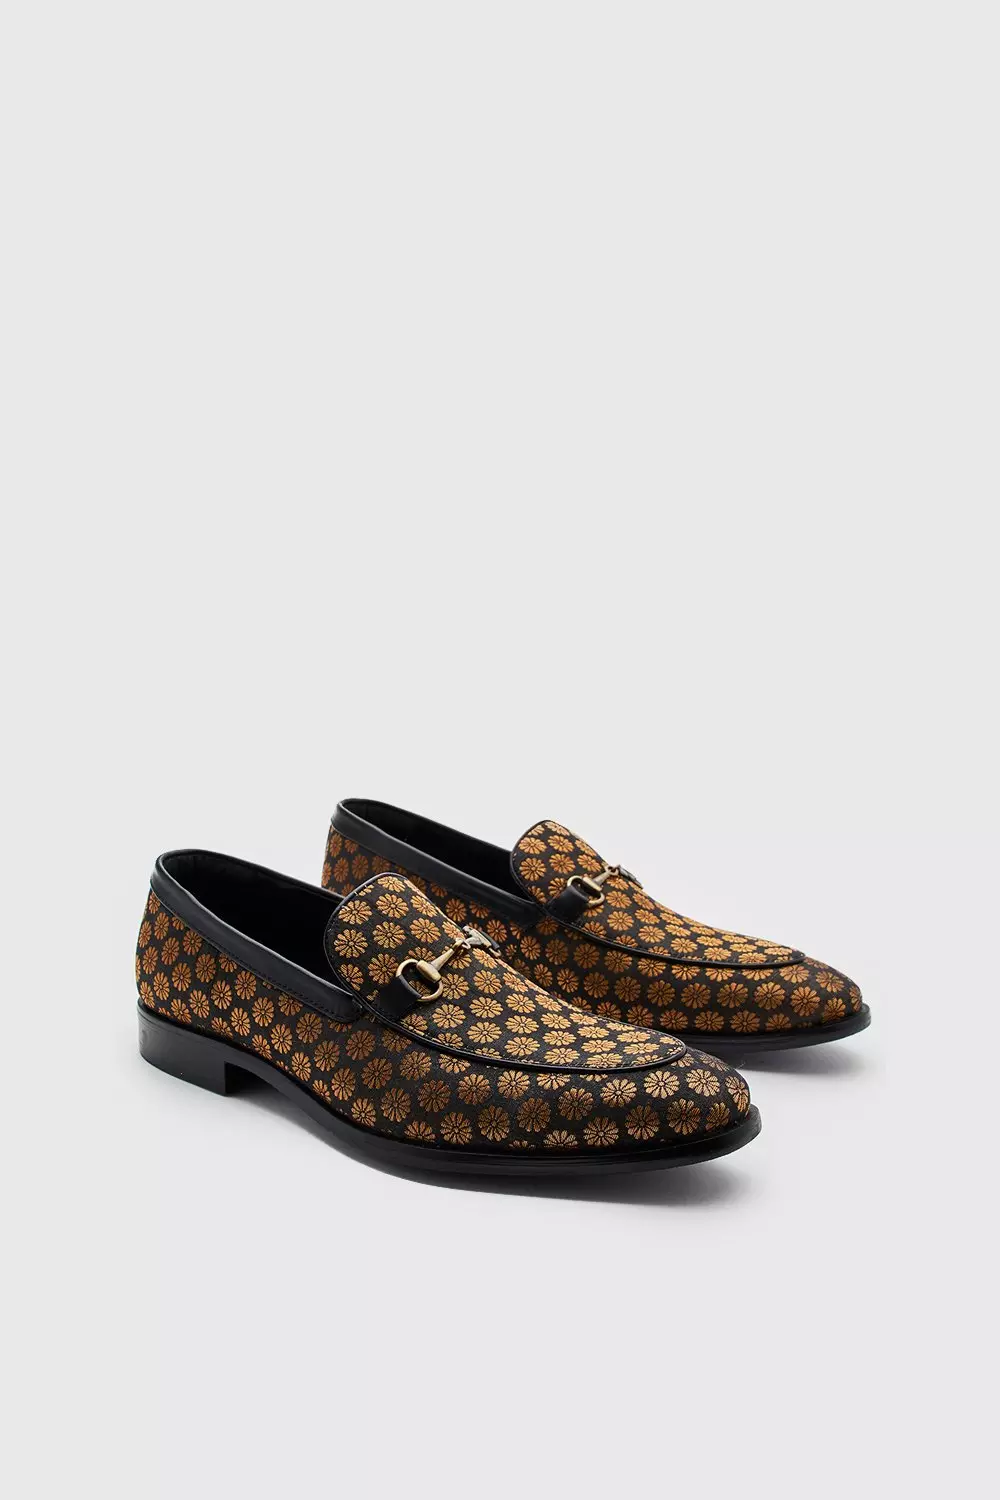 Louis Vuitton unisex woman man shoes snake pattern leather